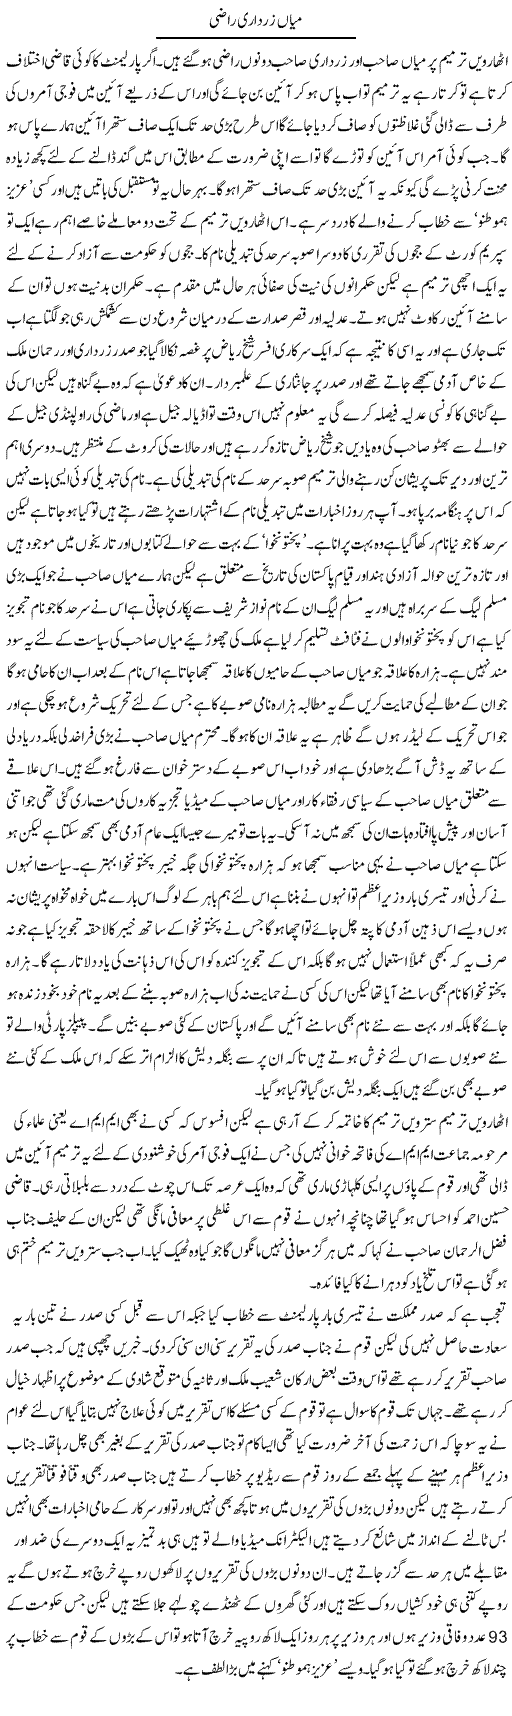 Mian Zardari razi Express Column Abdul Qadir 8 April 2010